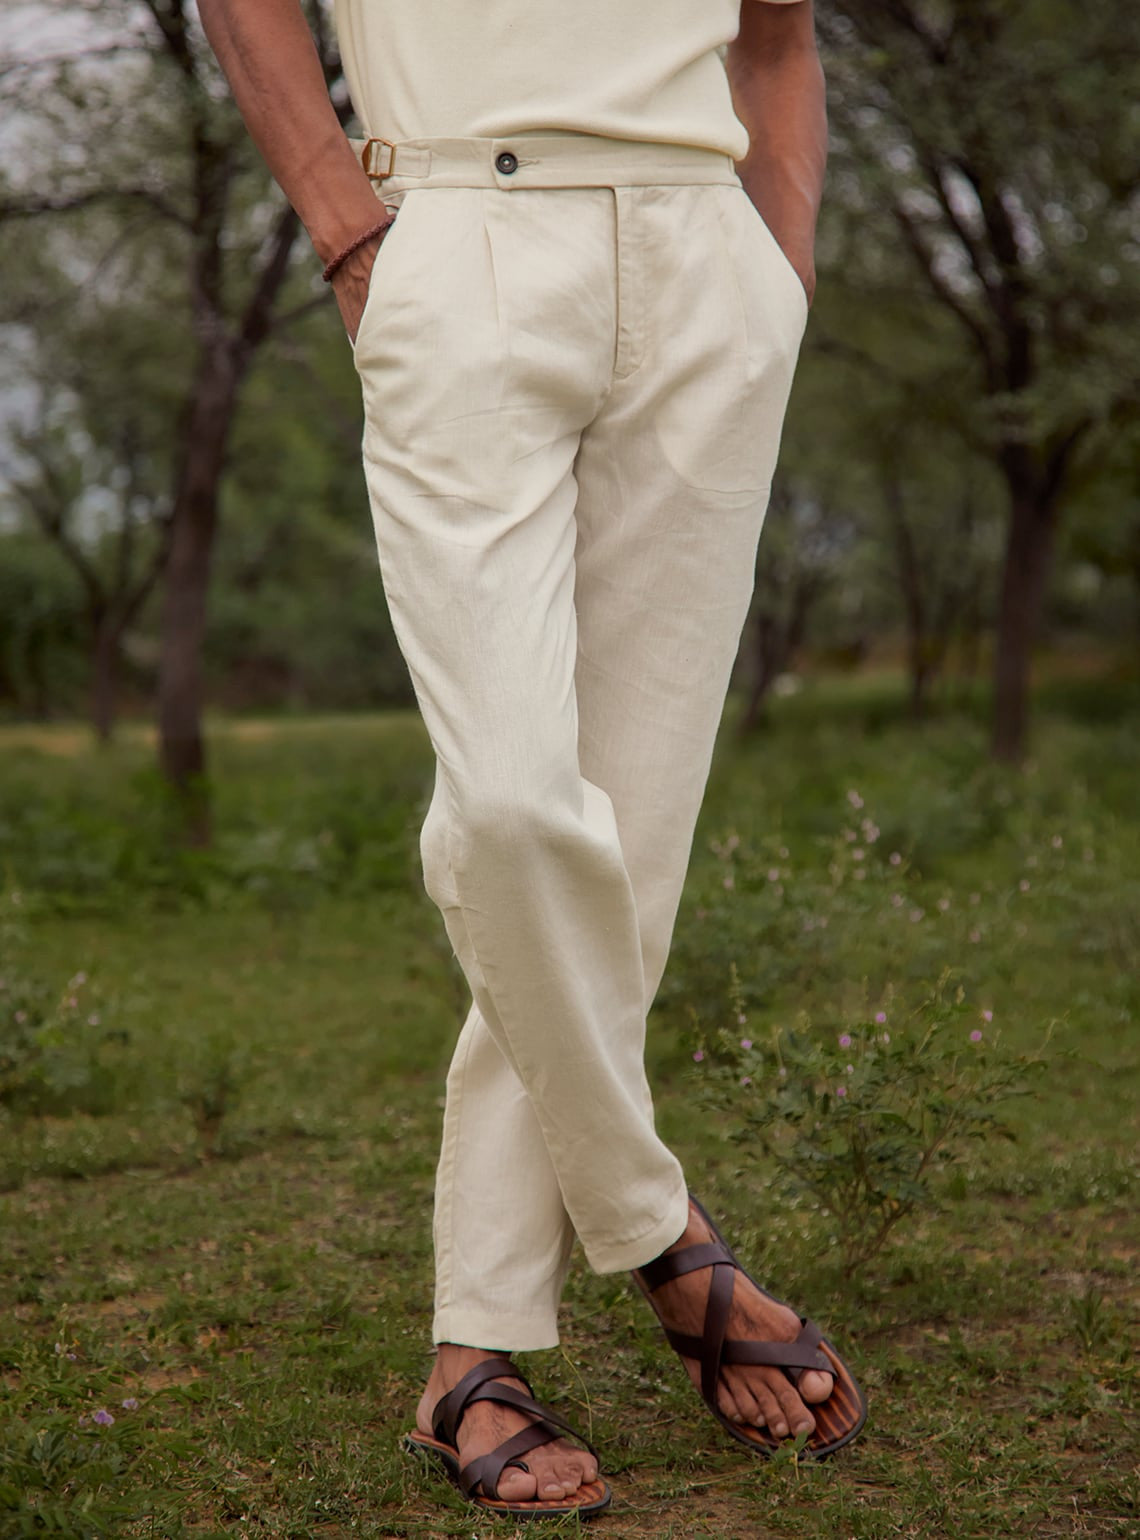 Buy Cream Linen Pant, Casual Beige Solid Bottomwear for Men Online